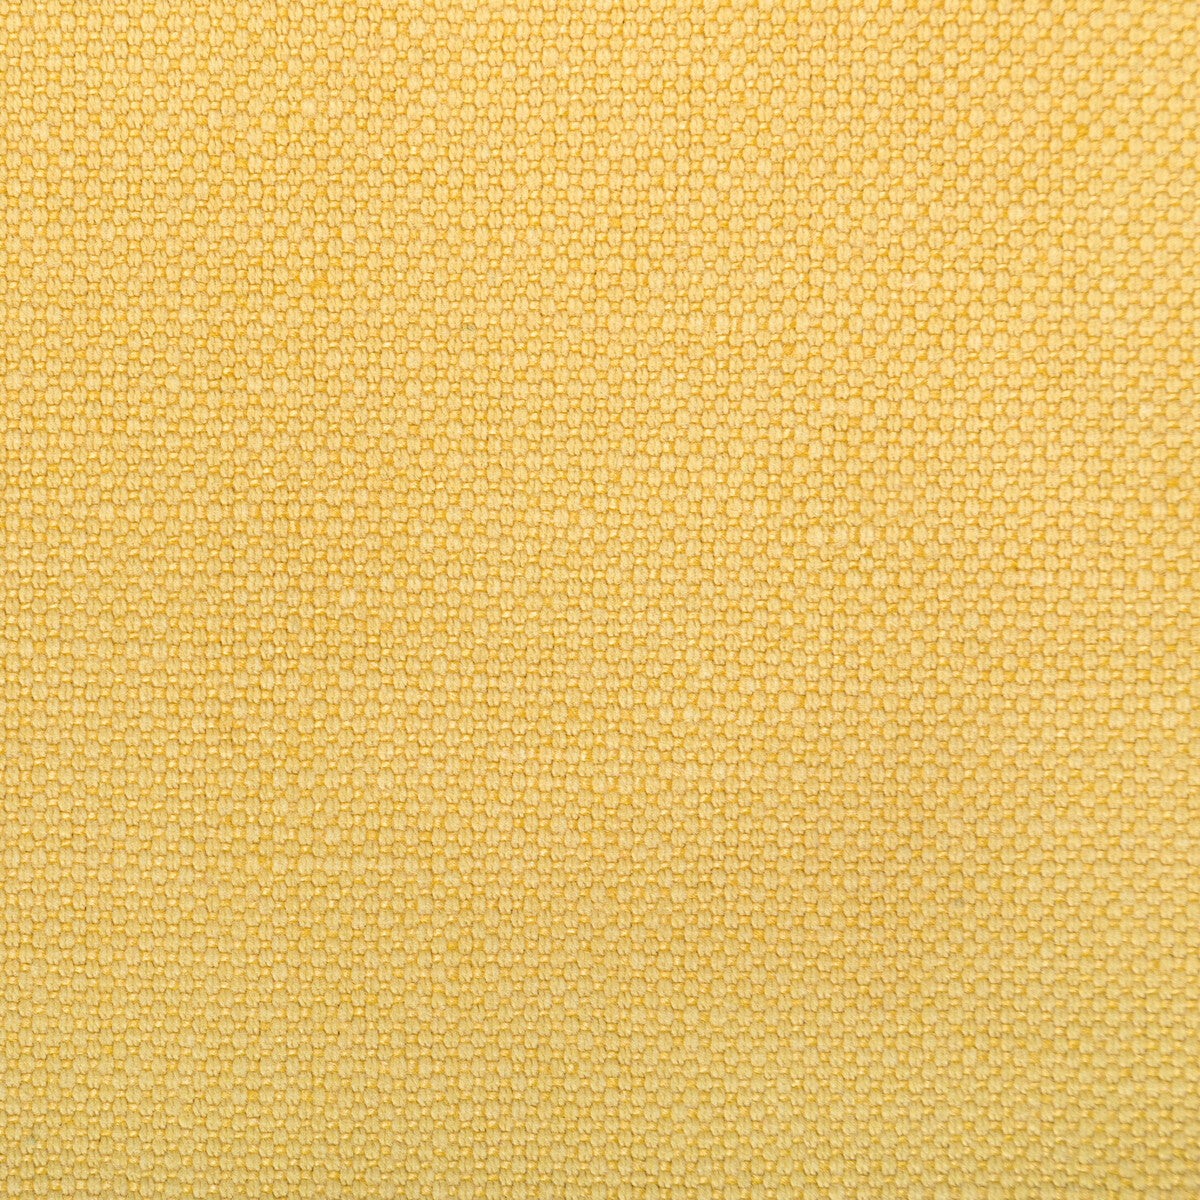 Carson fabric in sunshine color - pattern 36282.404.0 - by Kravet Basics